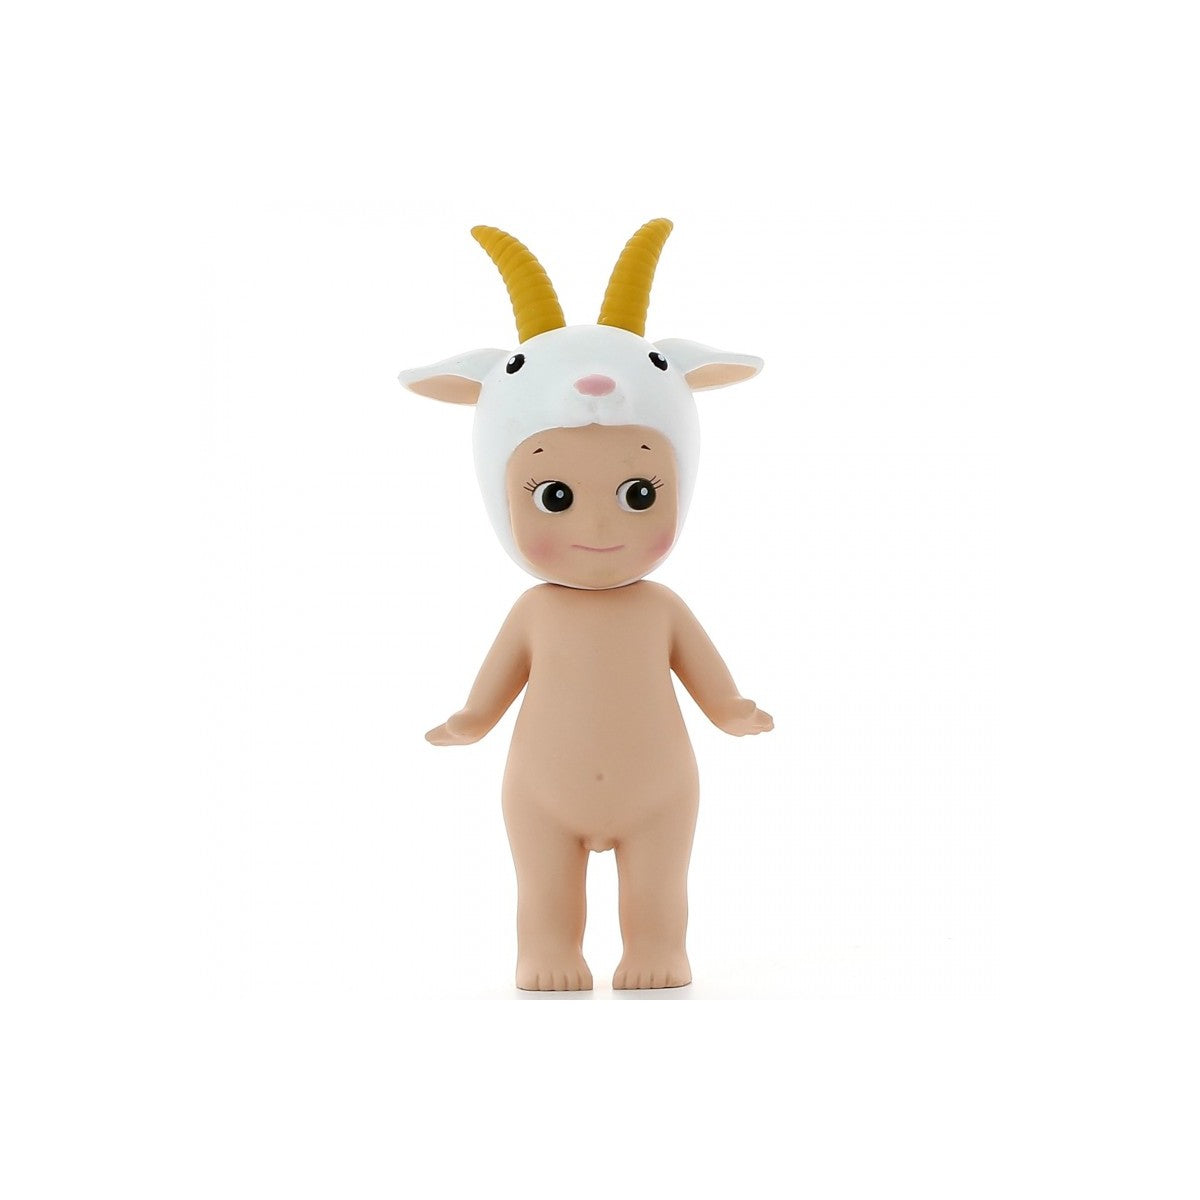 Sonny Angel - Mini figurine série Animal 4